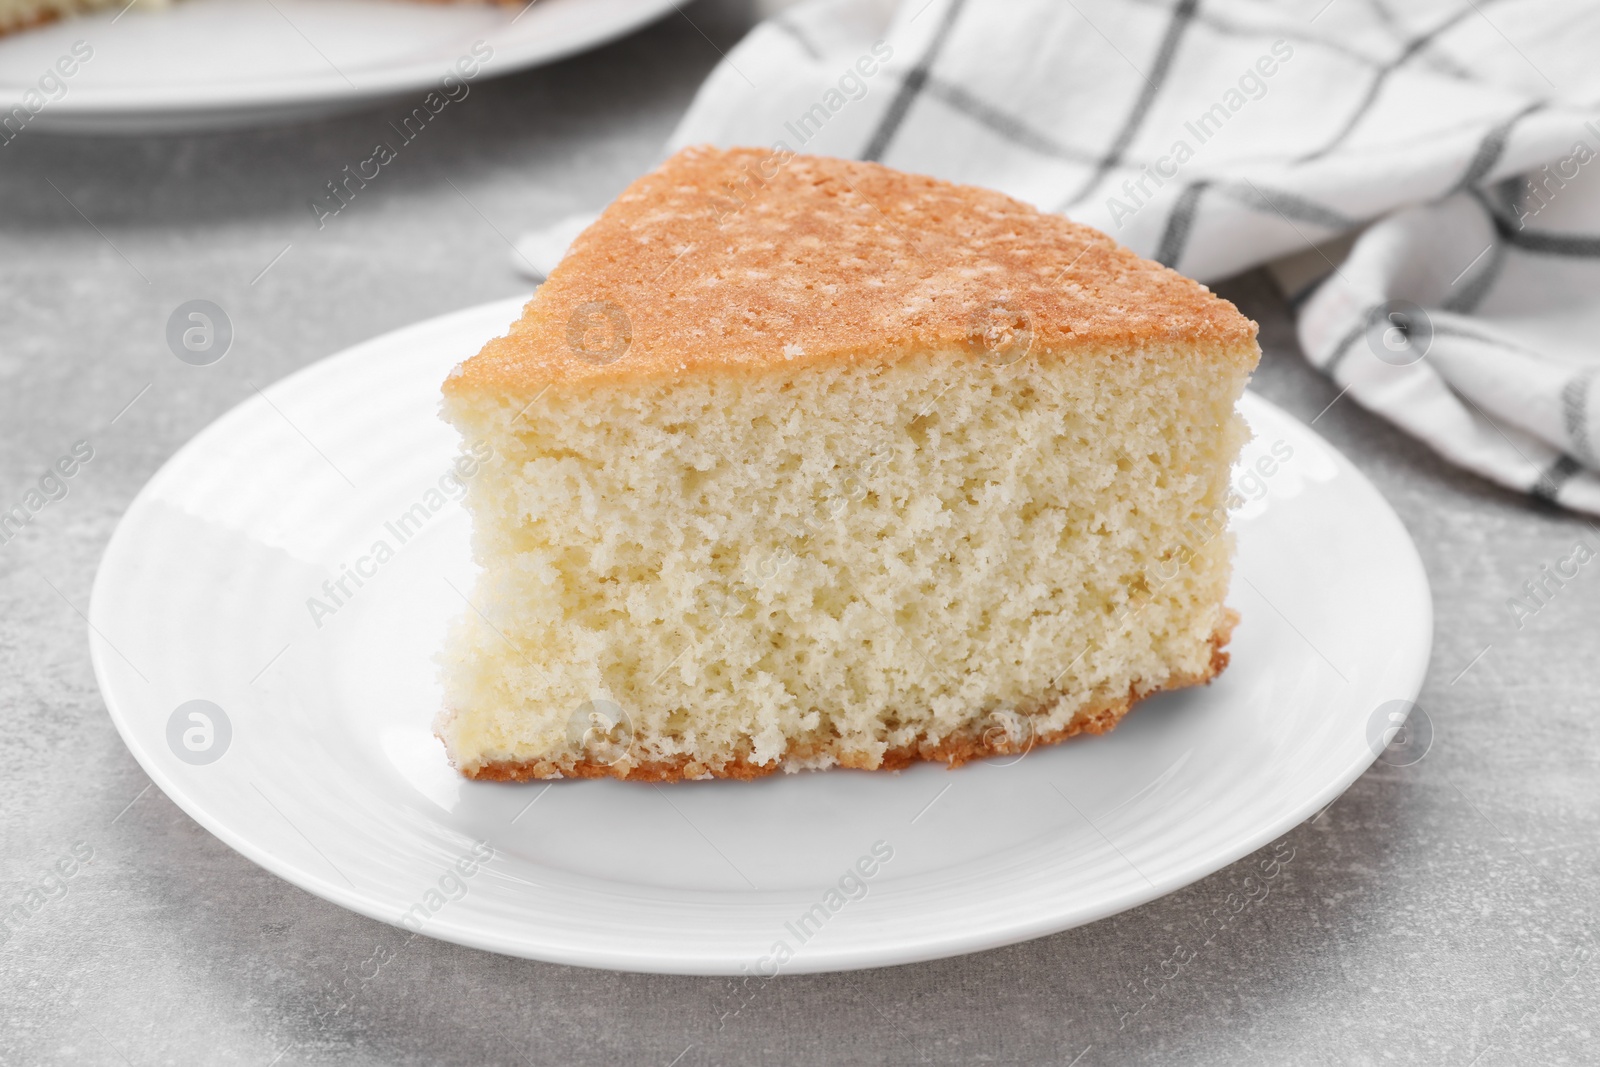 Photo of Piece of tasty sponge cake on grey table, closeup